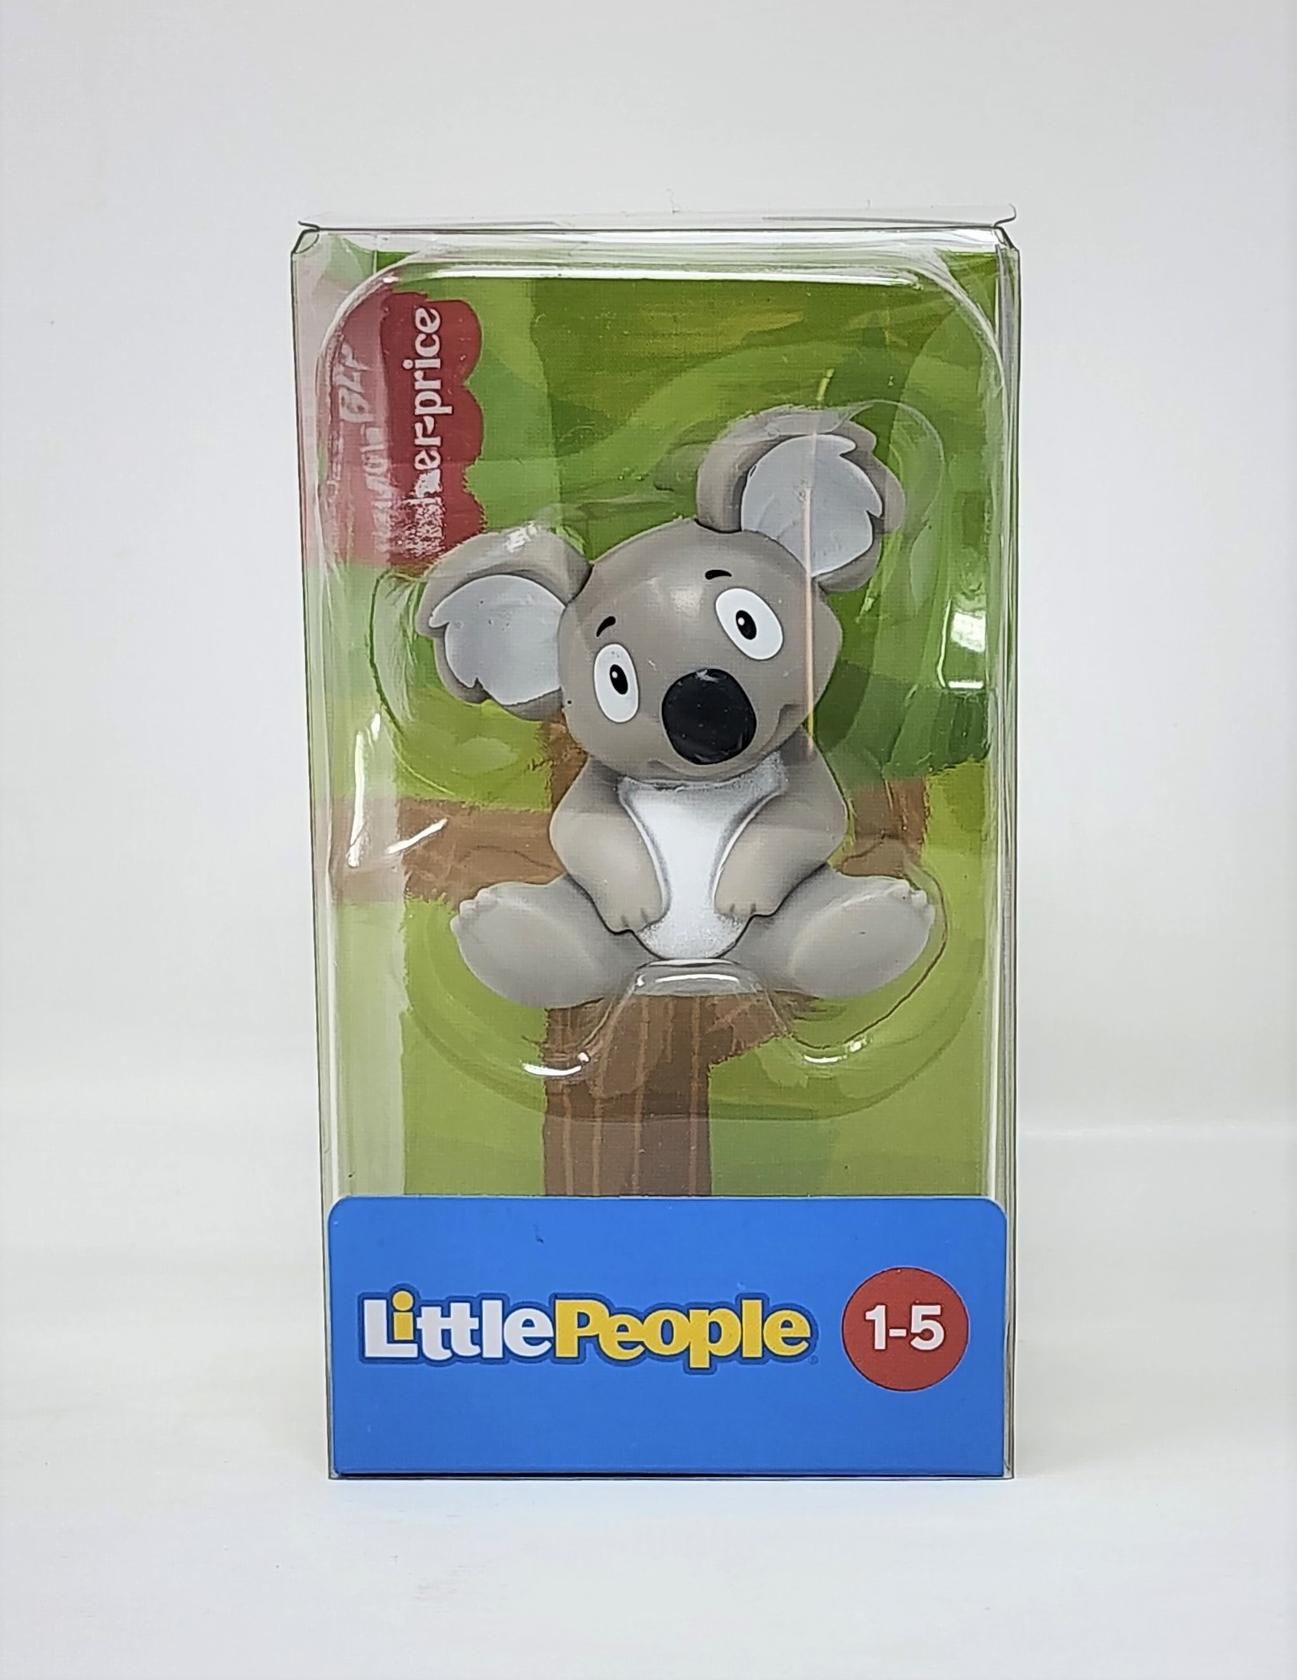 Bundle of 2 |Fisher-Price Little People Single Animal (Koala + Lion)